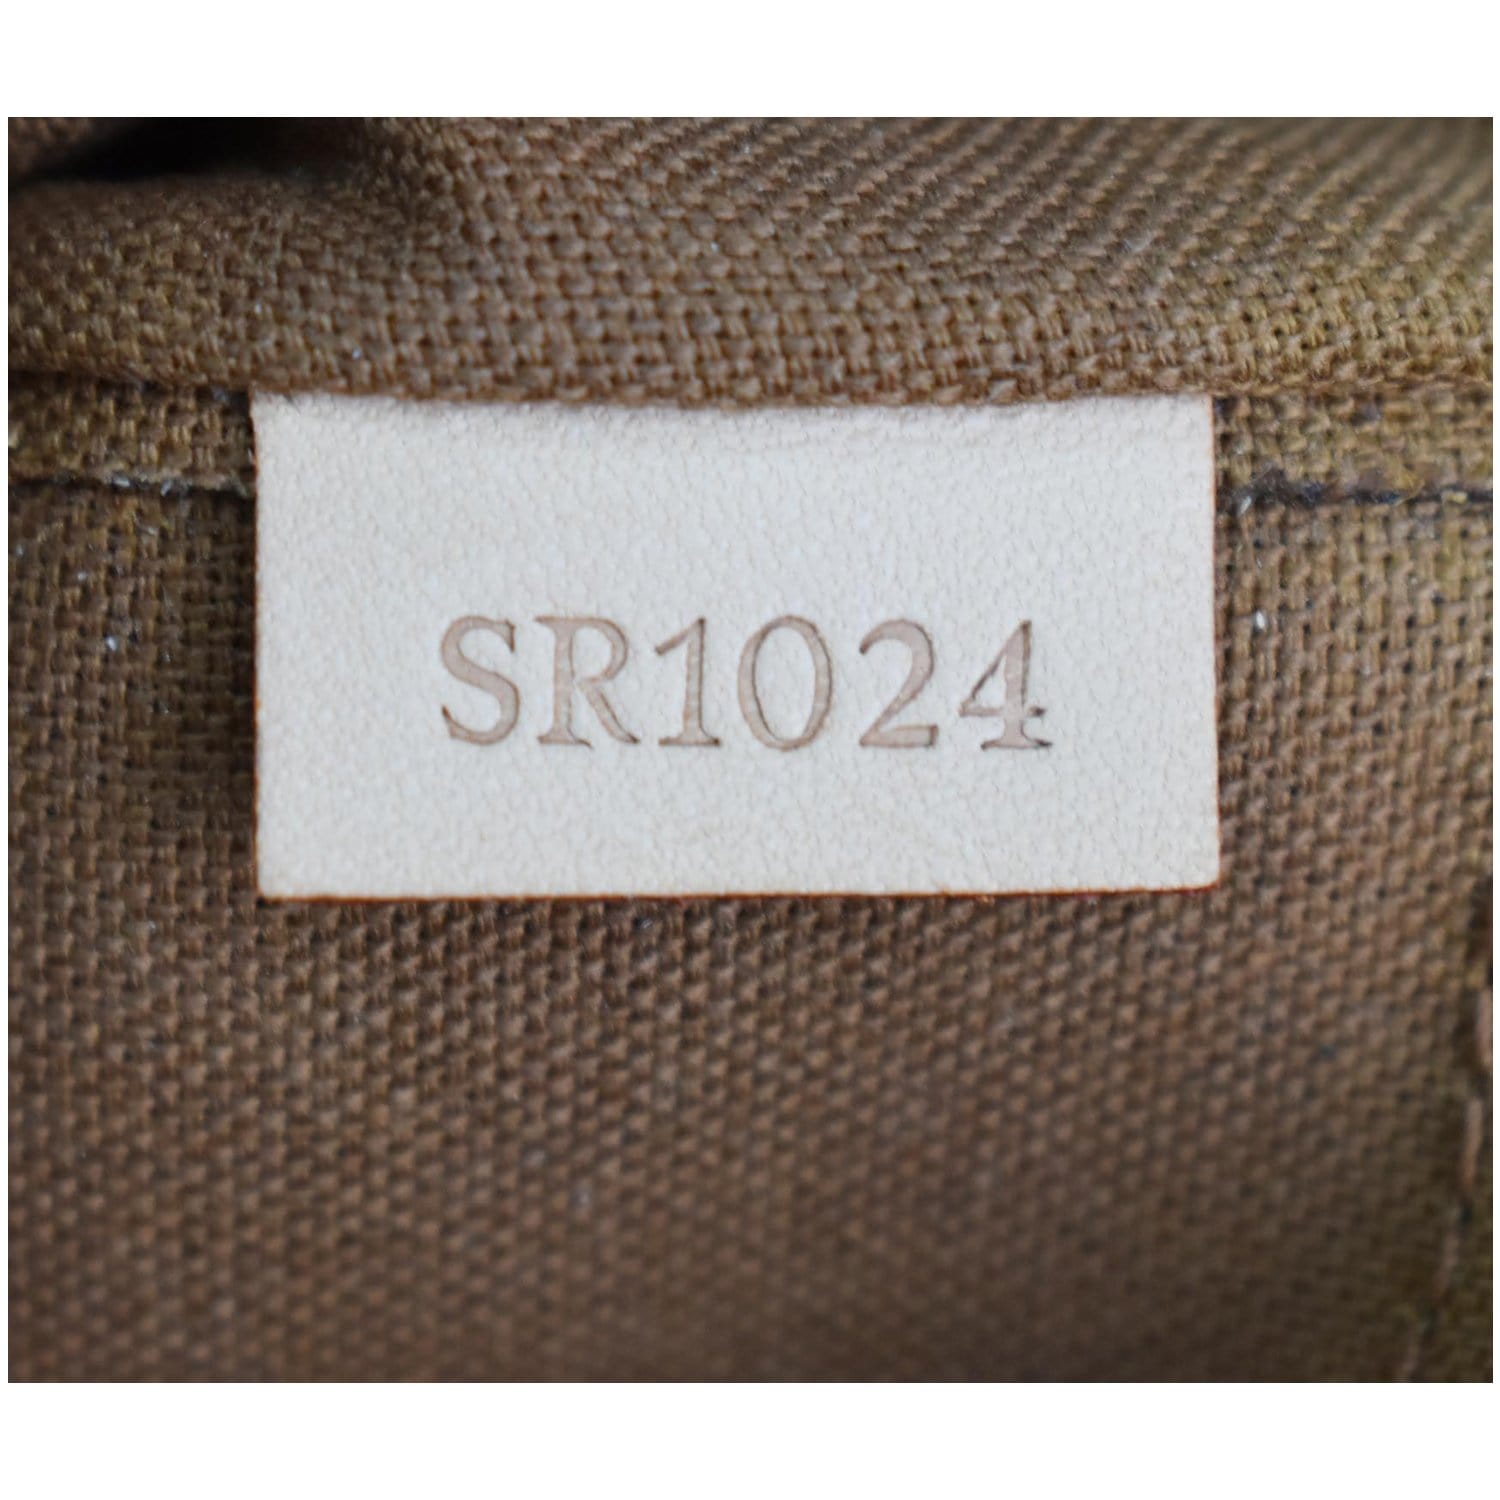 Louis Vuitton Marelle Monogram Sac A Dos 3way 233590 Brown Coated